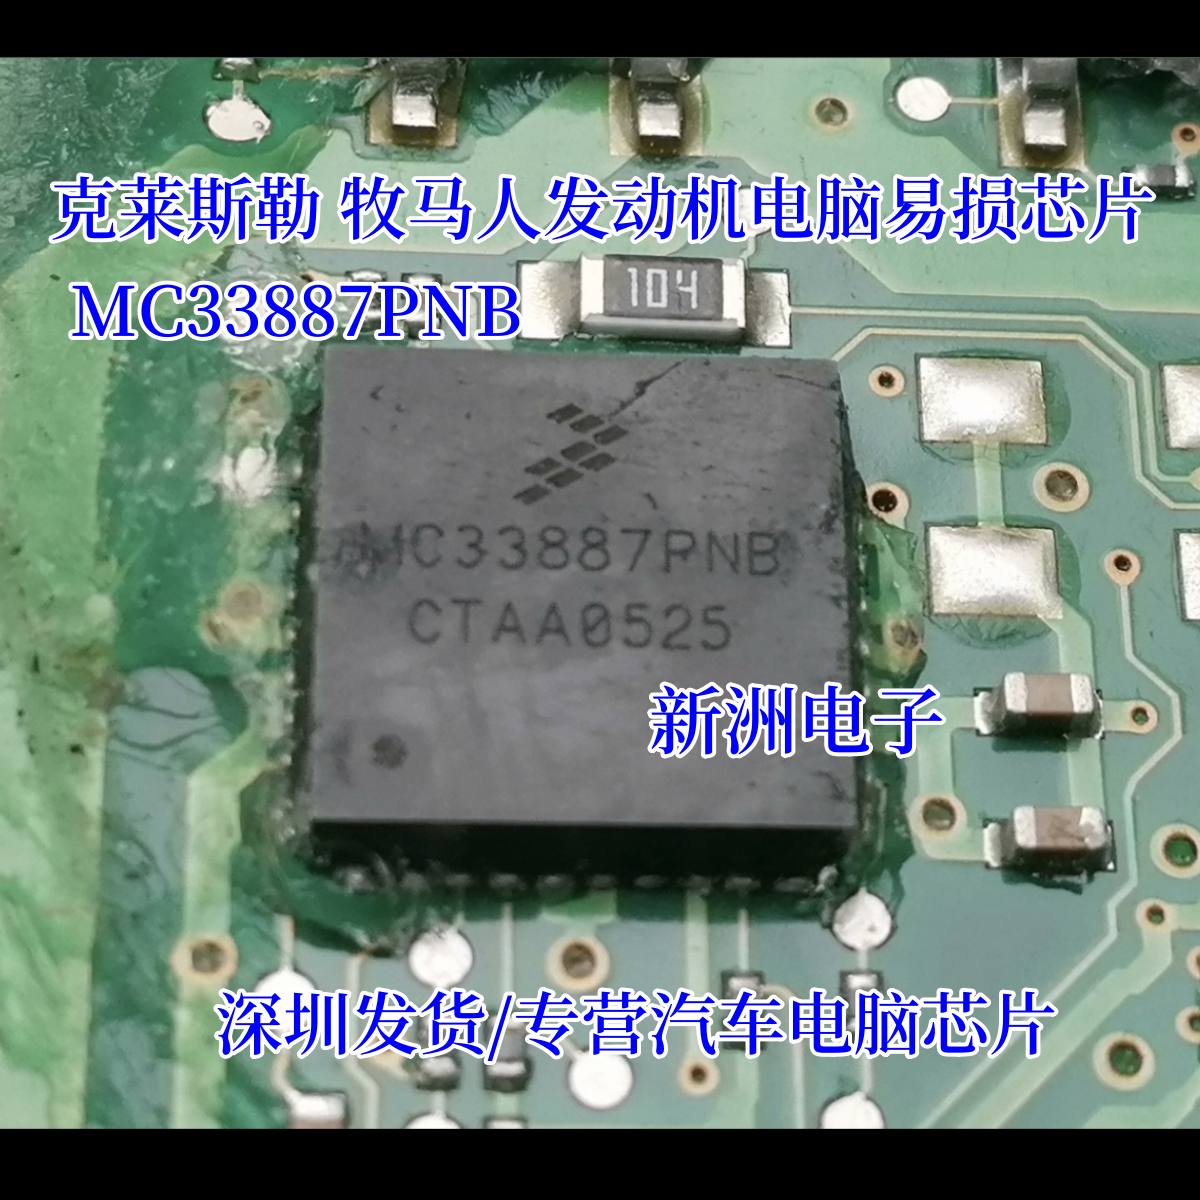 MC33887PNB 适用克莱斯勒 牧马人发动机电脑易损节气门驱动芯片